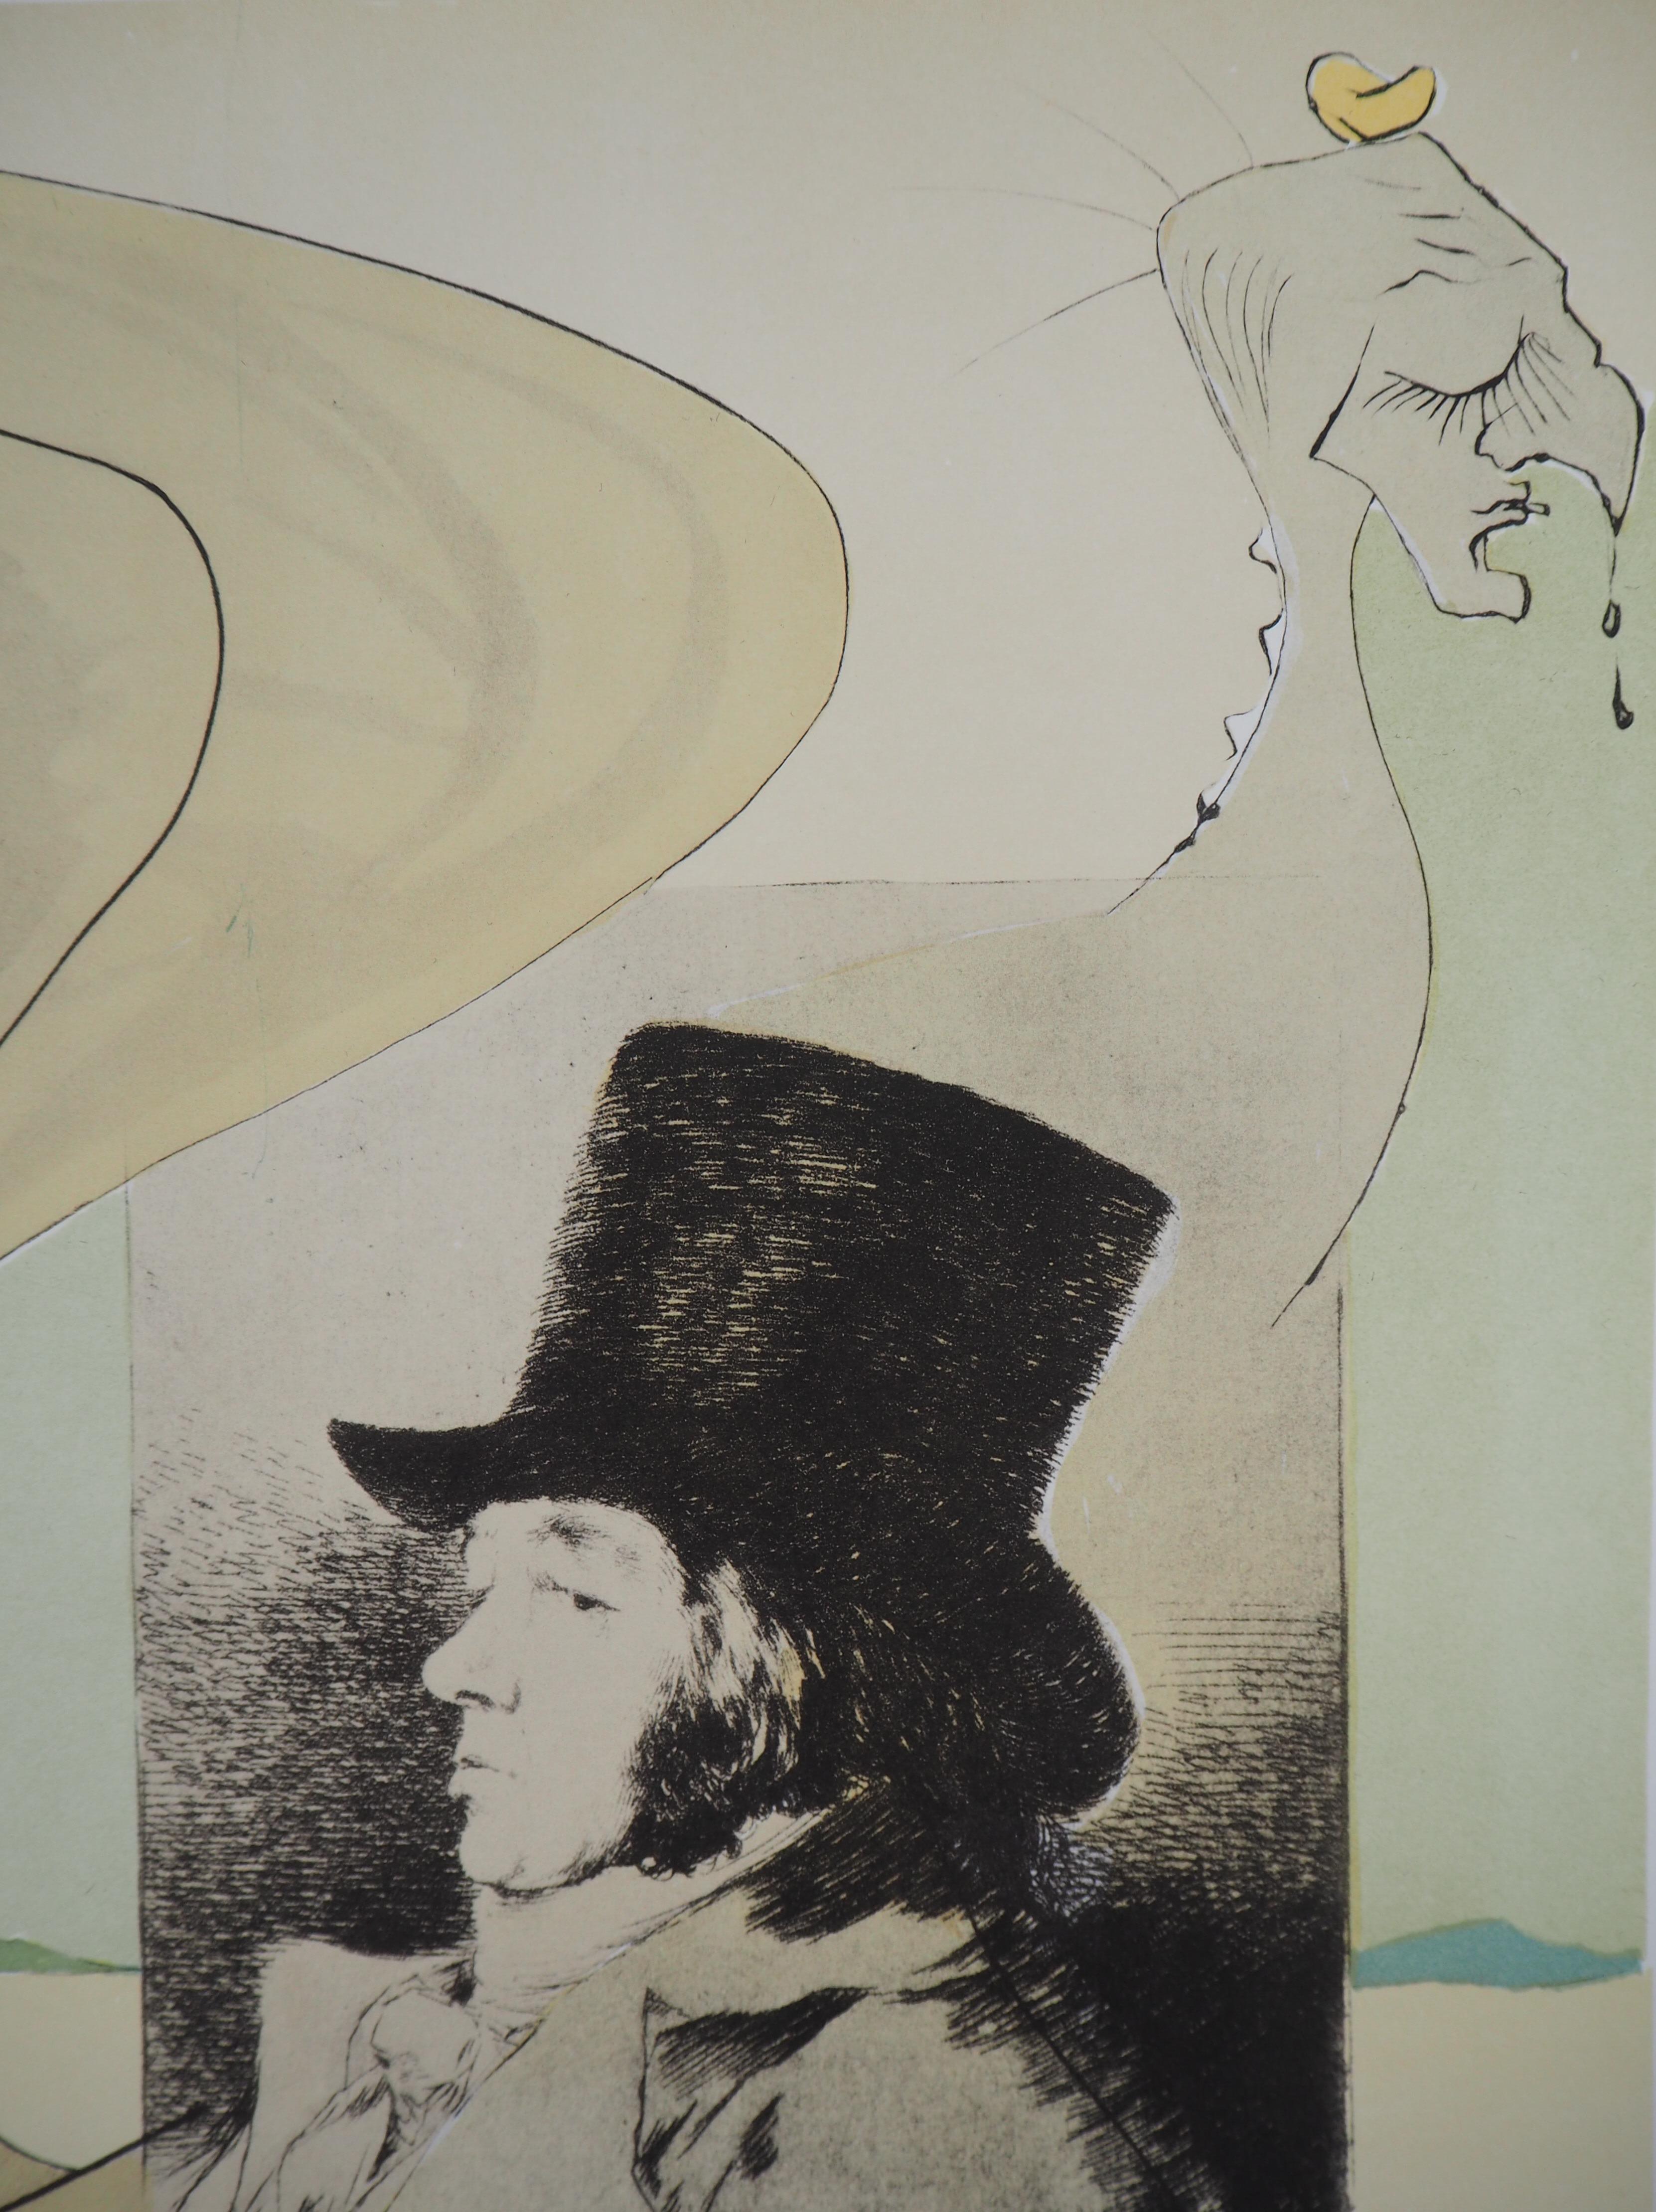 Les Caprices de Goya - Lithograph Poster (Field #77-3) - Surrealist Print by (after) Salvador Dali